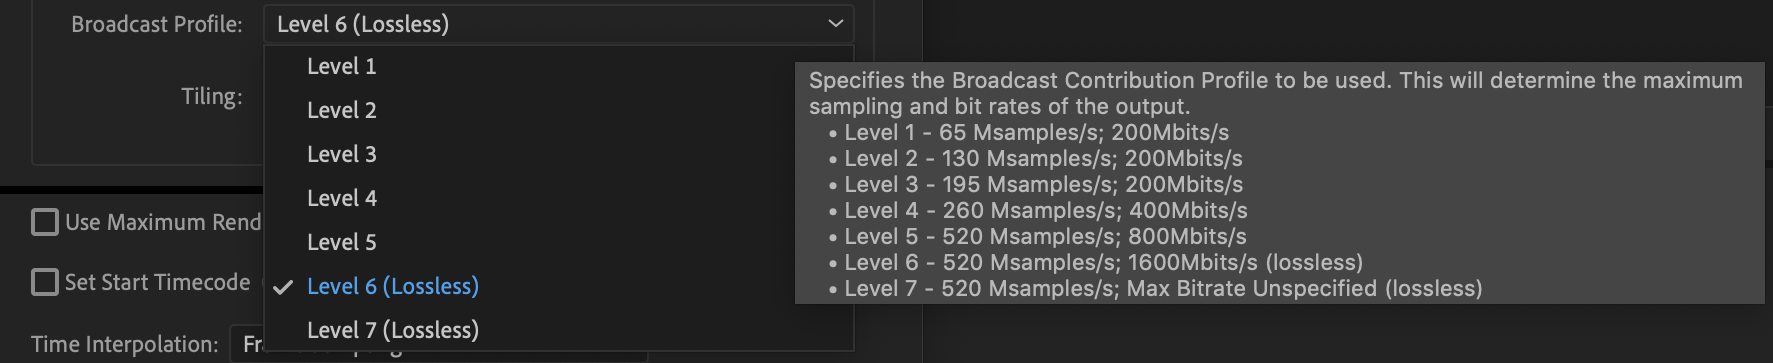 Broadcast profile settings from Adobe Media Encoder 2018